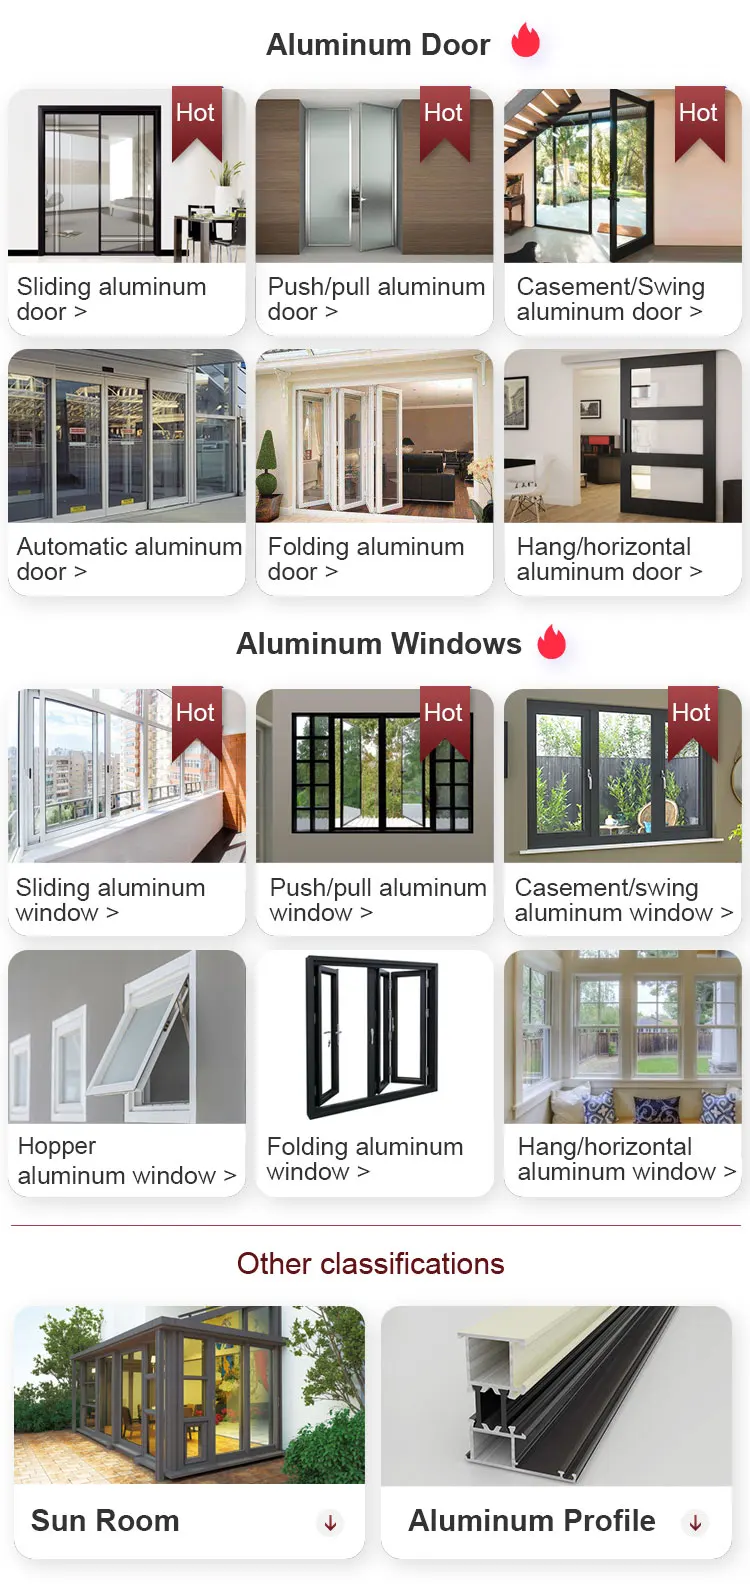 hinged out aluminium swing window double side-hung window open outside casement aluminum windows